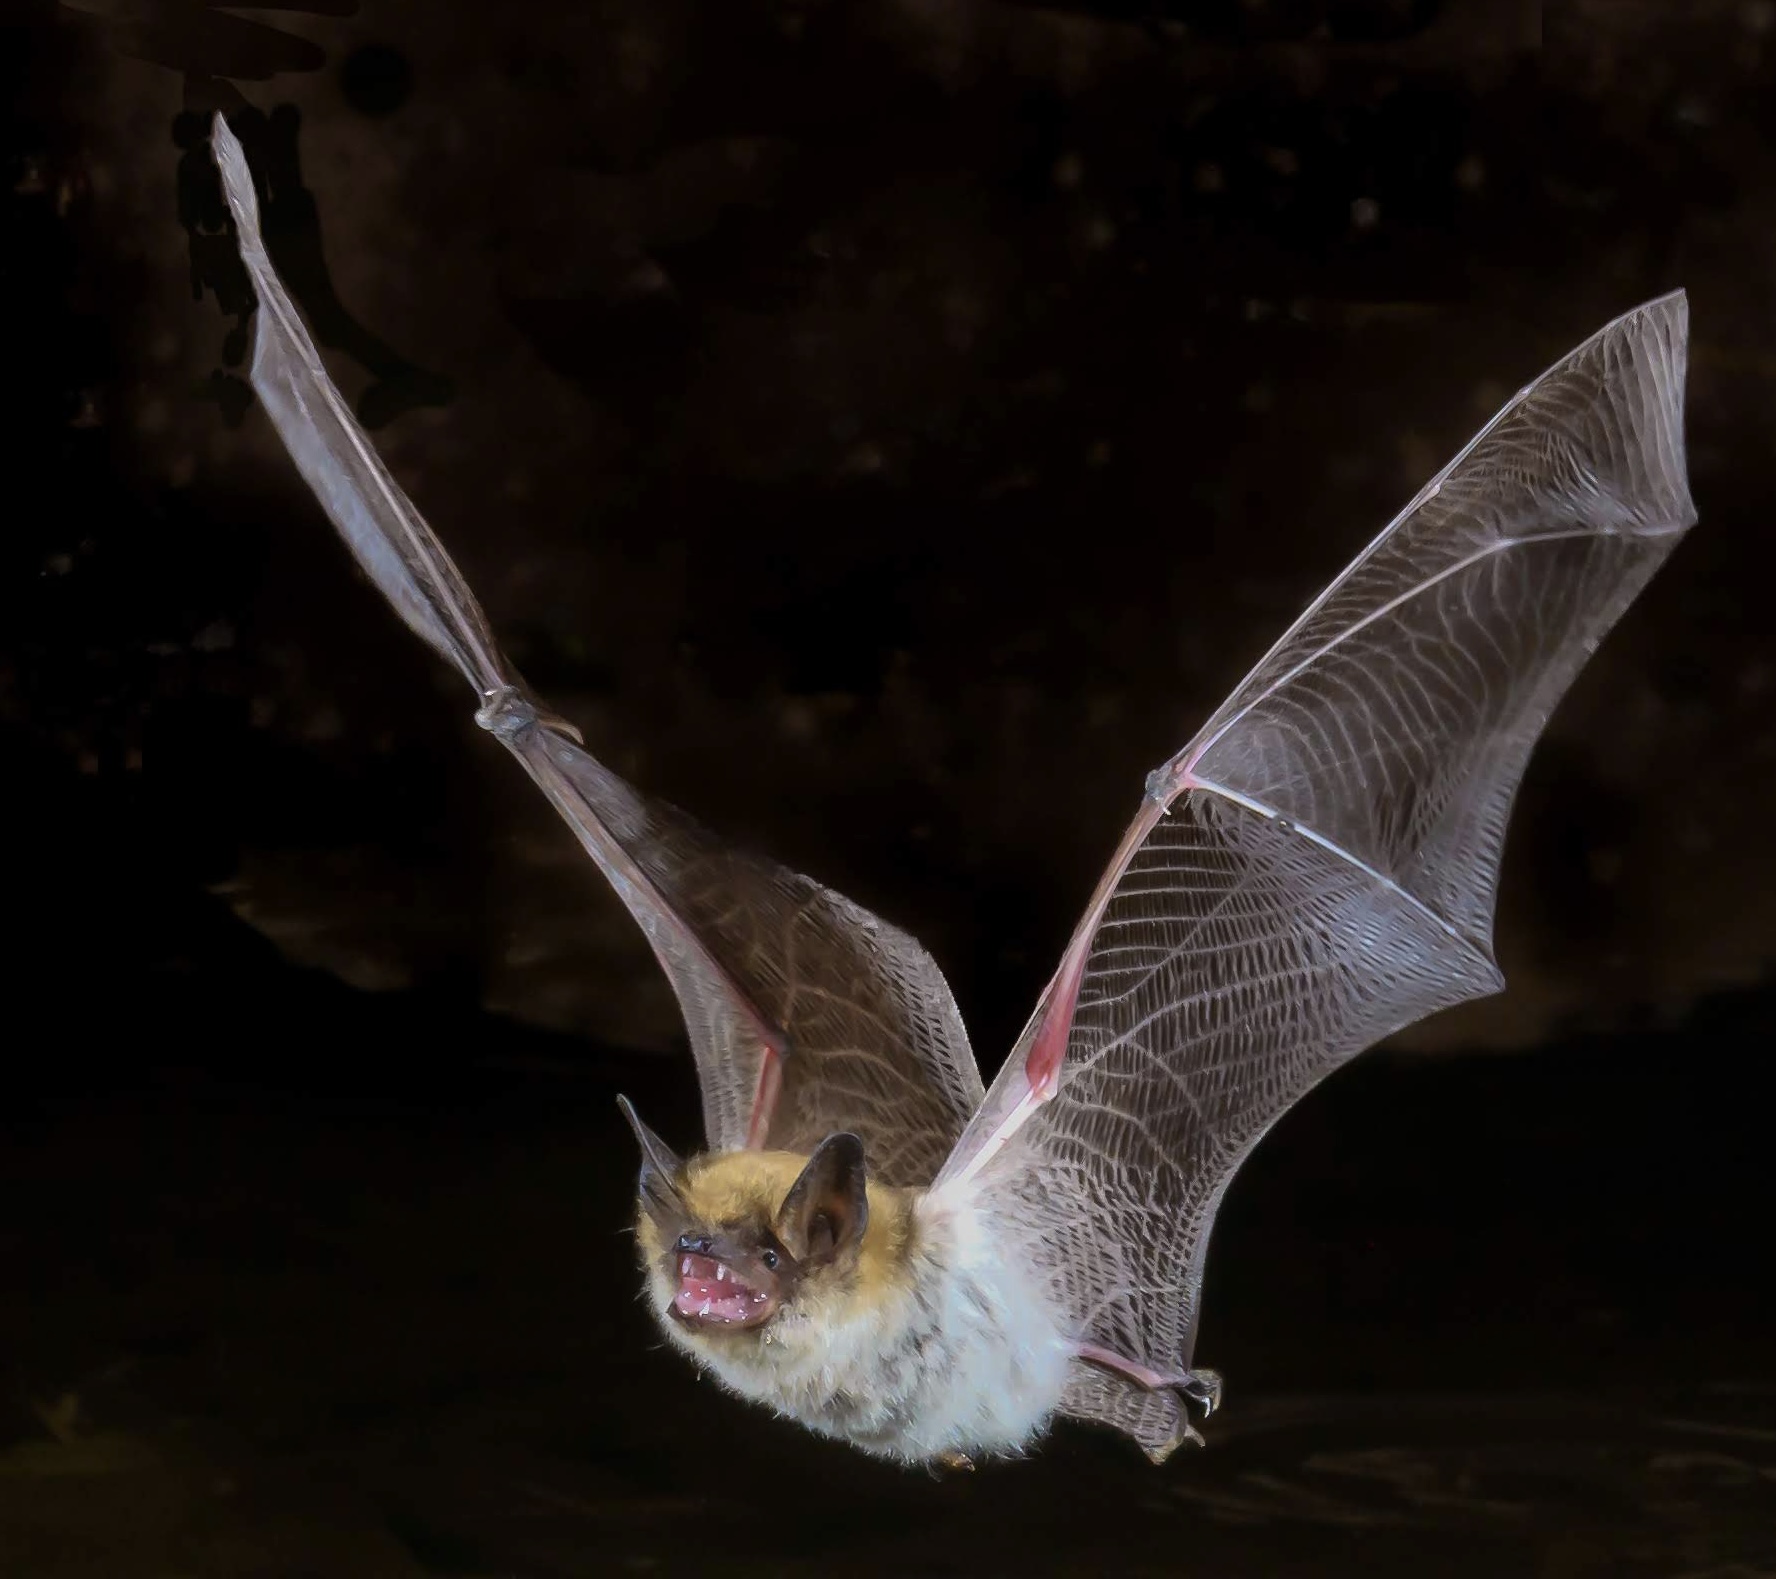 A photo of a Southwestern myotis bat in flight.